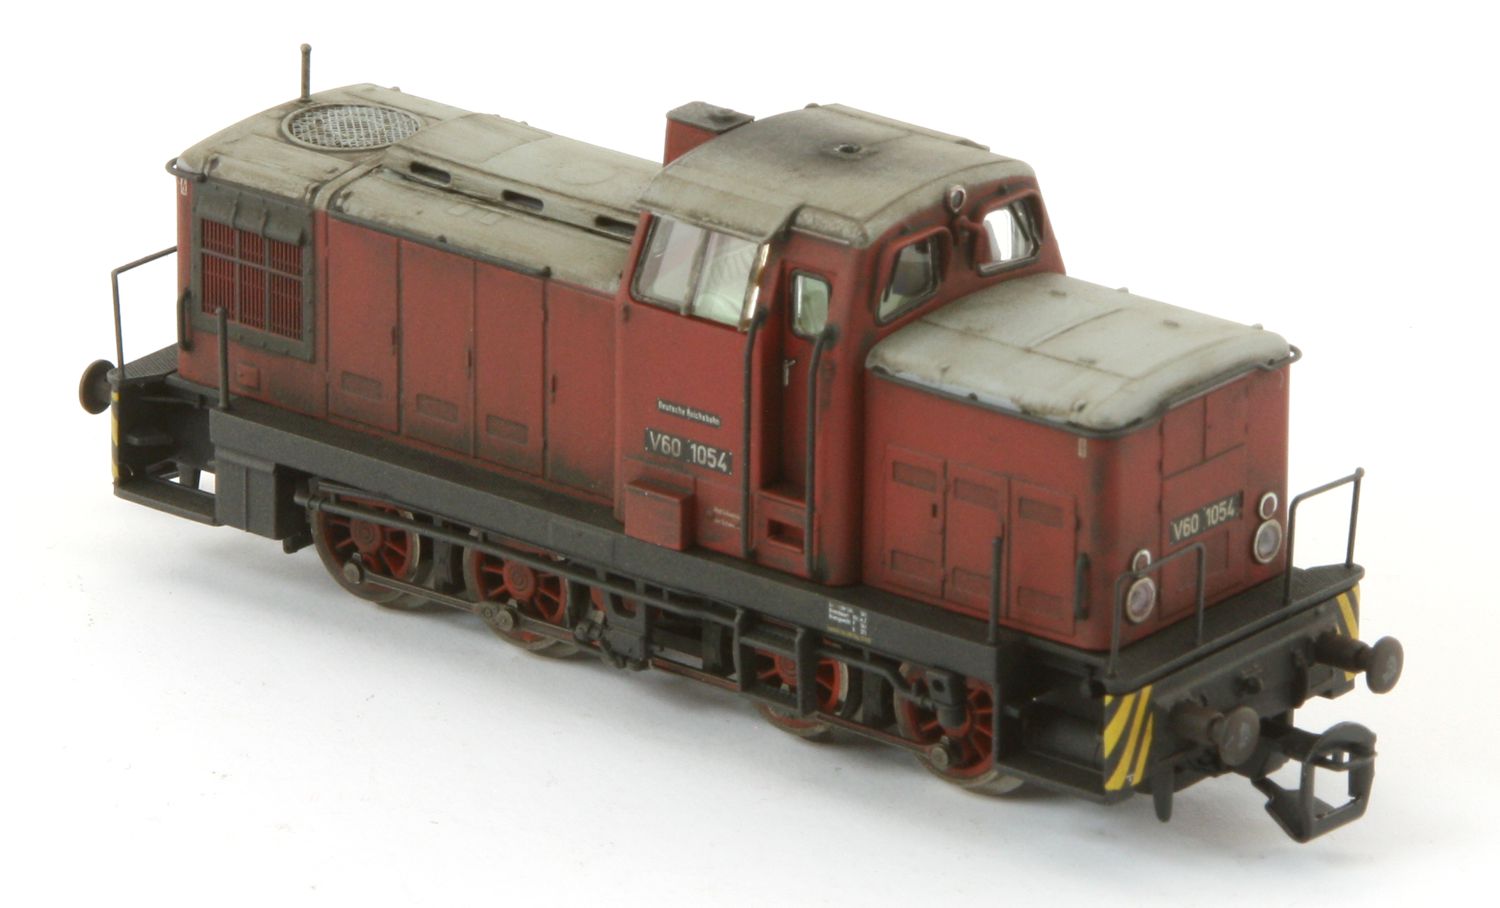 Saxonia 120090 - Diesellok V 60 1054, DR, Ep.III, gealtert